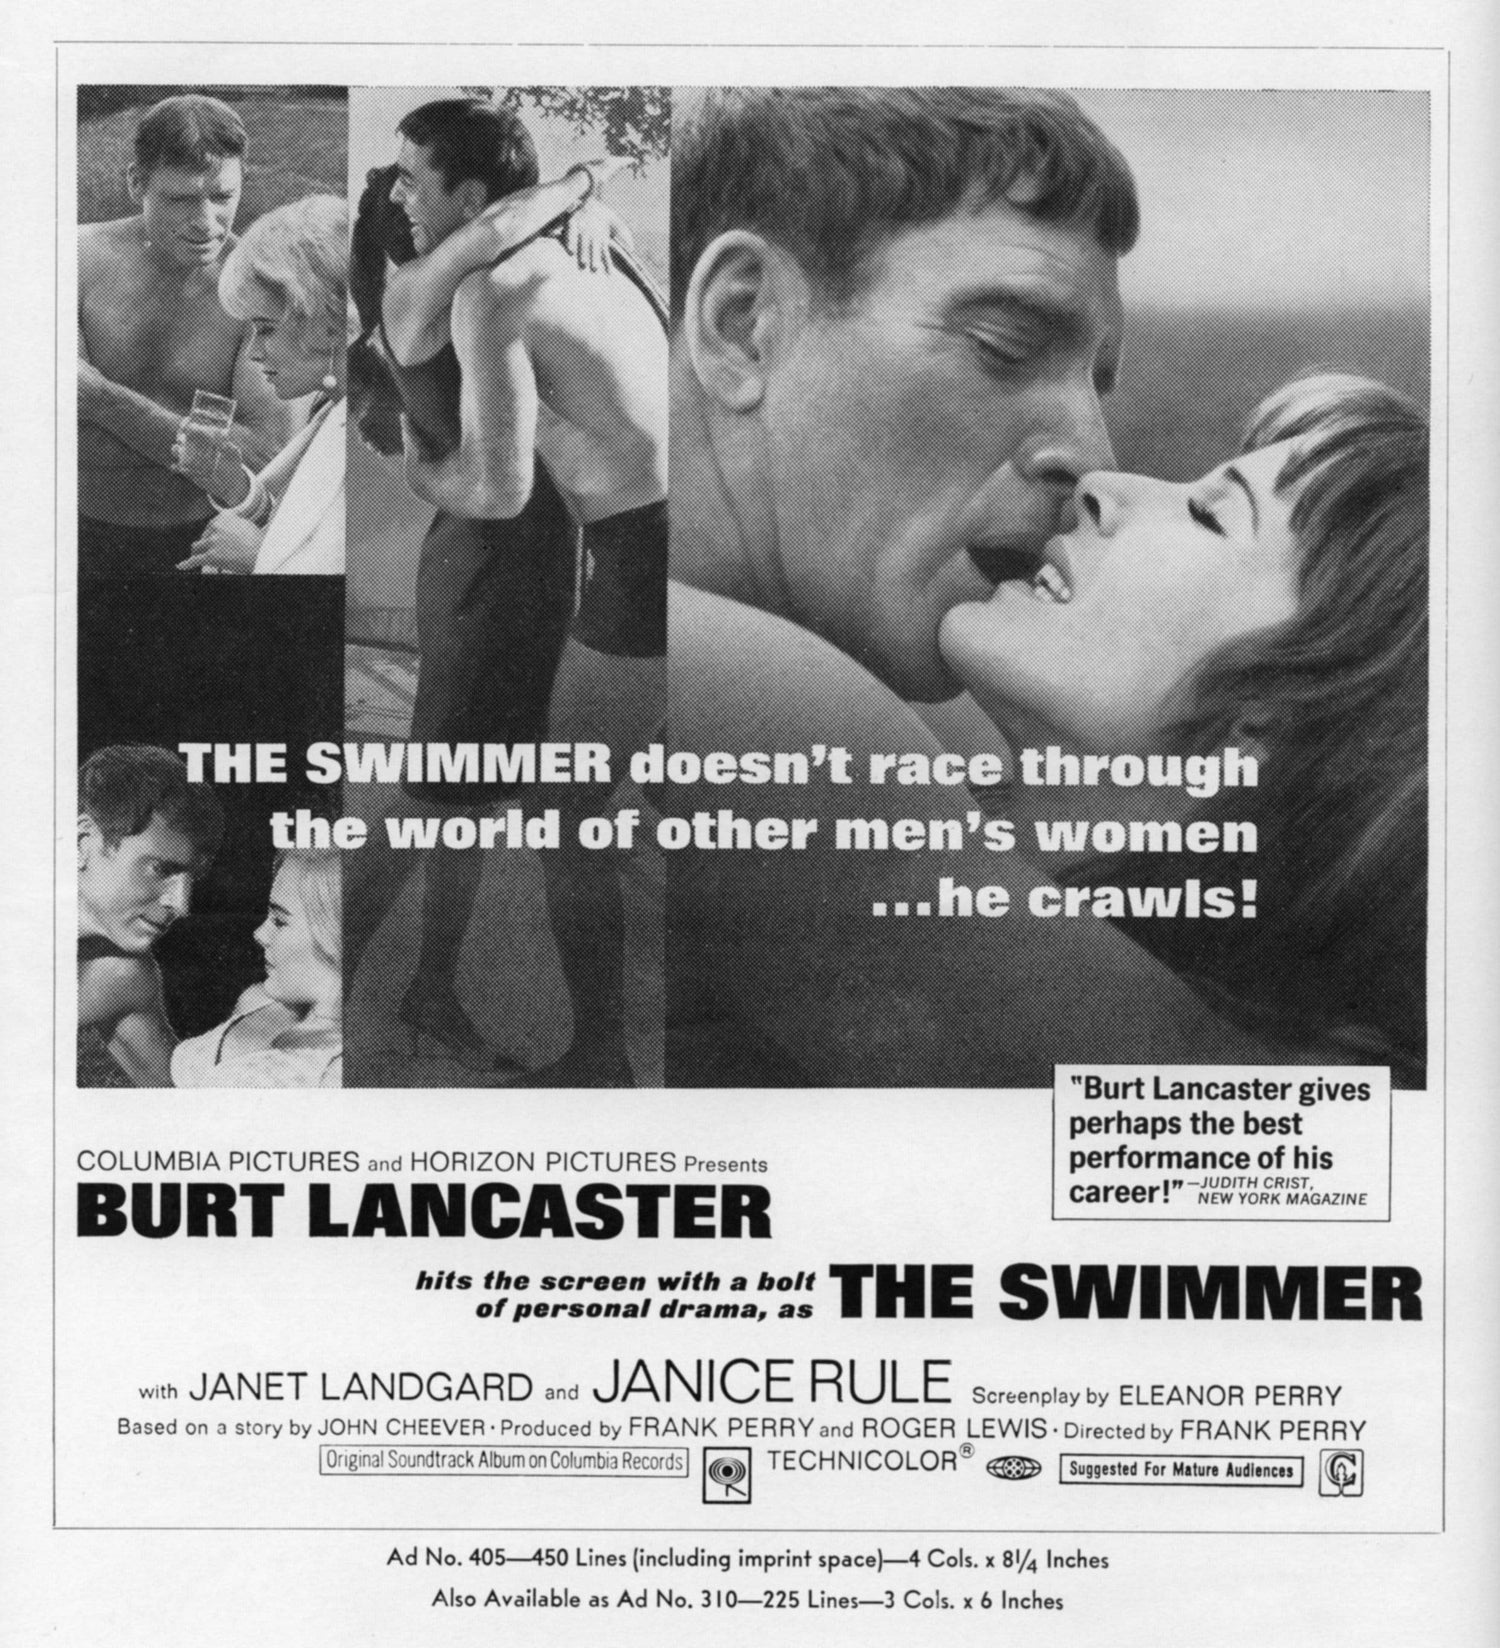 THE SWIMMER (1968) Blu-ray / DVD Combo